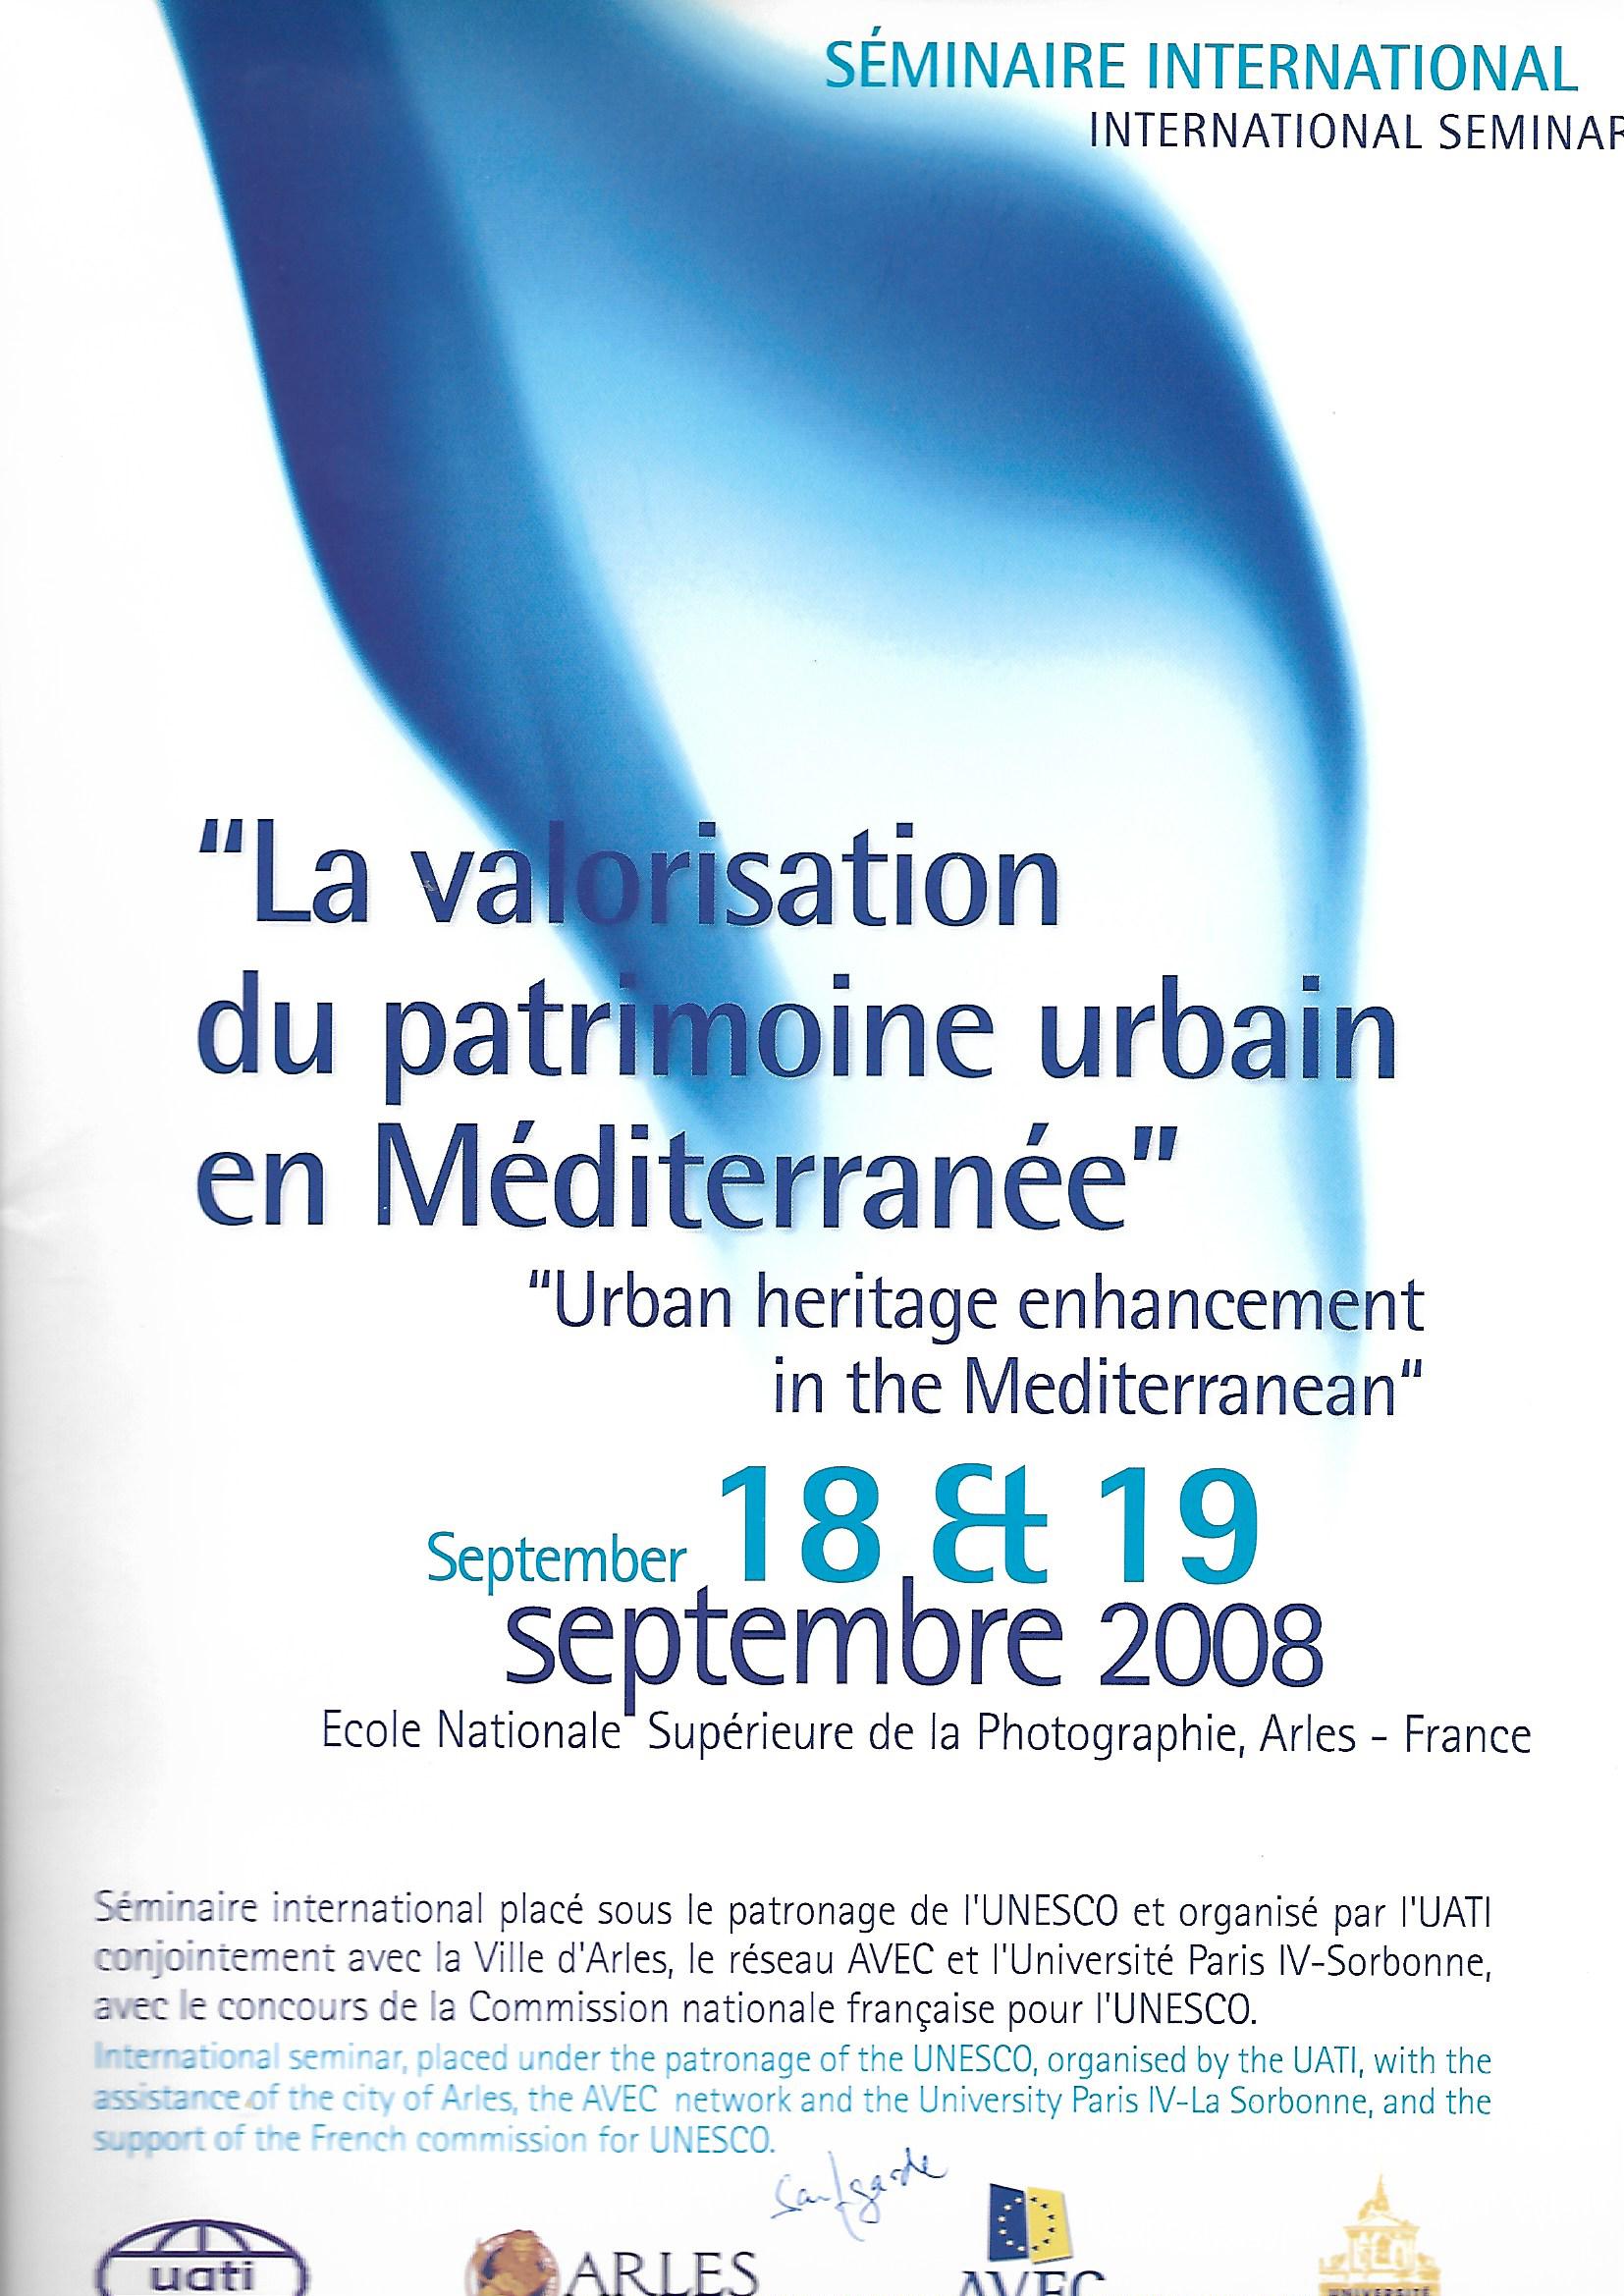 Urban heritage enhancement in the Mediterranean 9.2008 & 4.2010, Arles, France